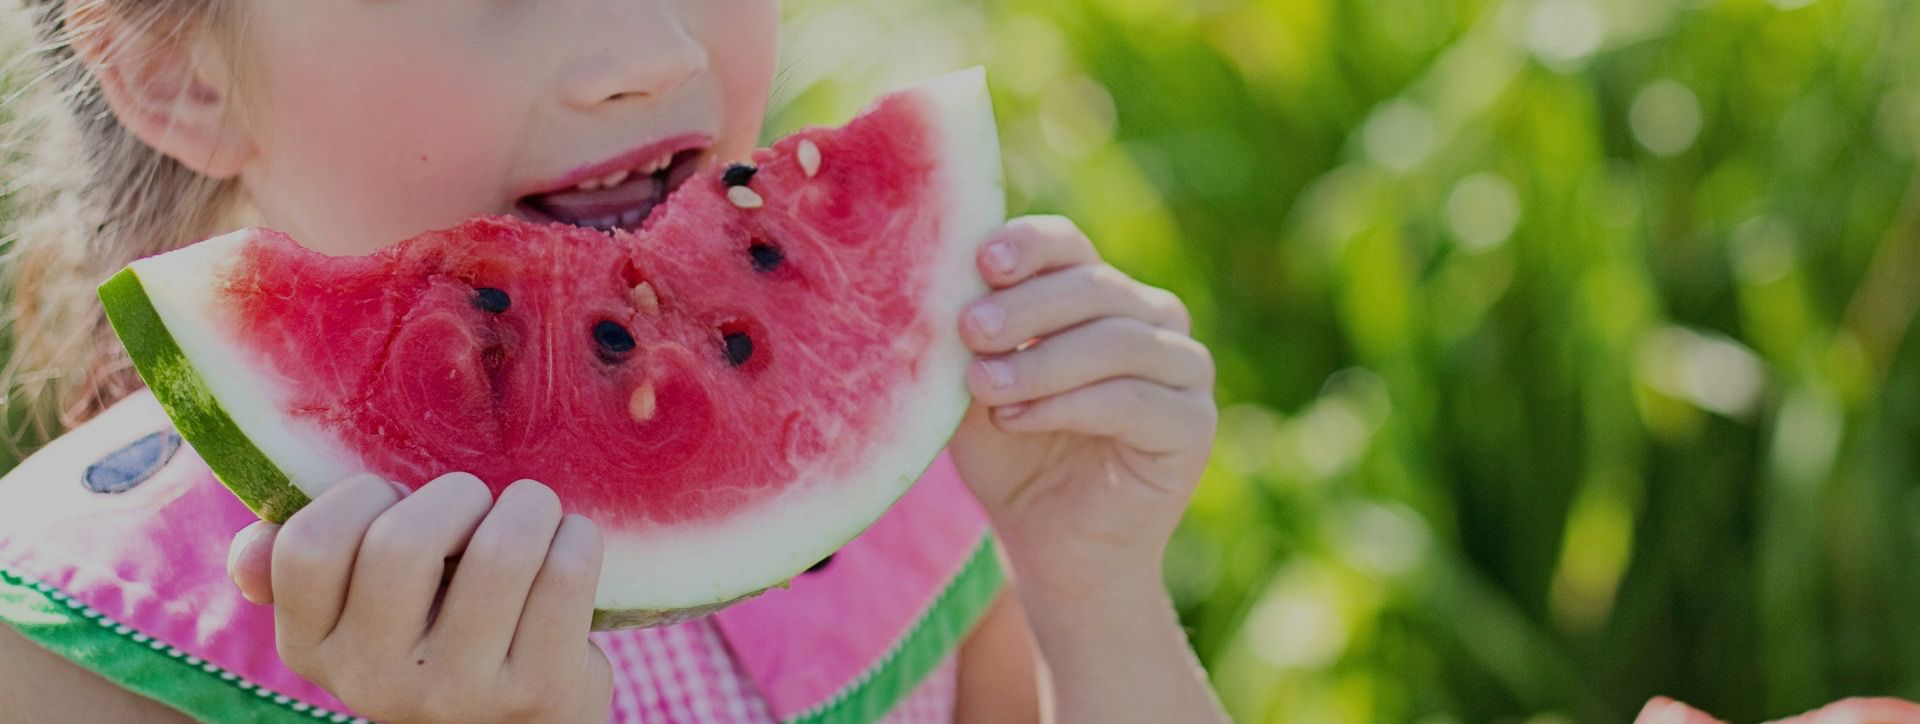 child eating fresh slice of watermelon